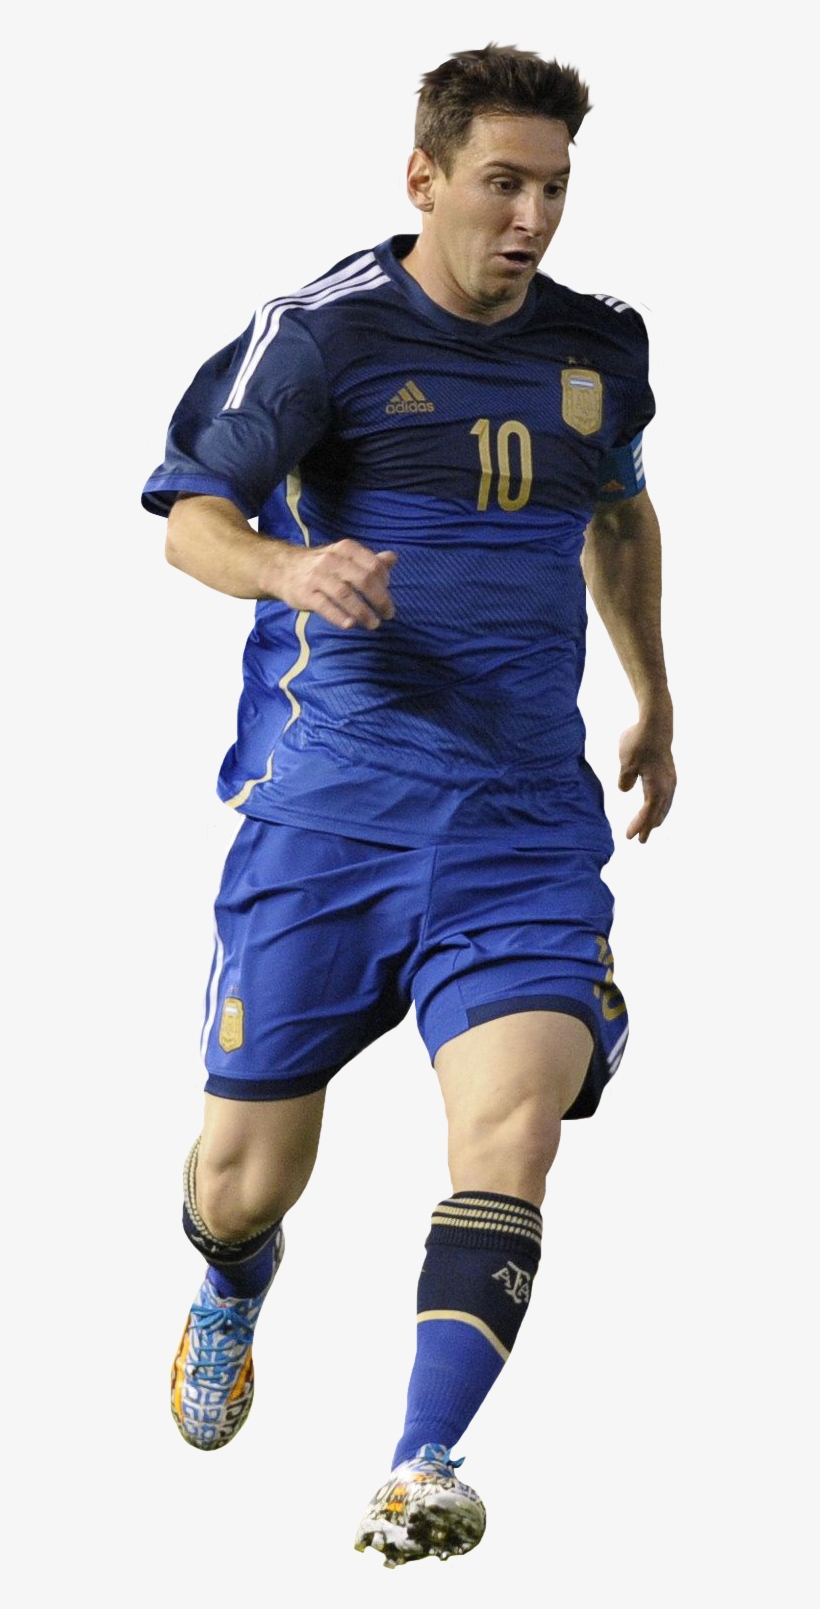 Joaquín Peloc Jersey Football Player Sport Argentina - Messi2018, transparent png #5069580